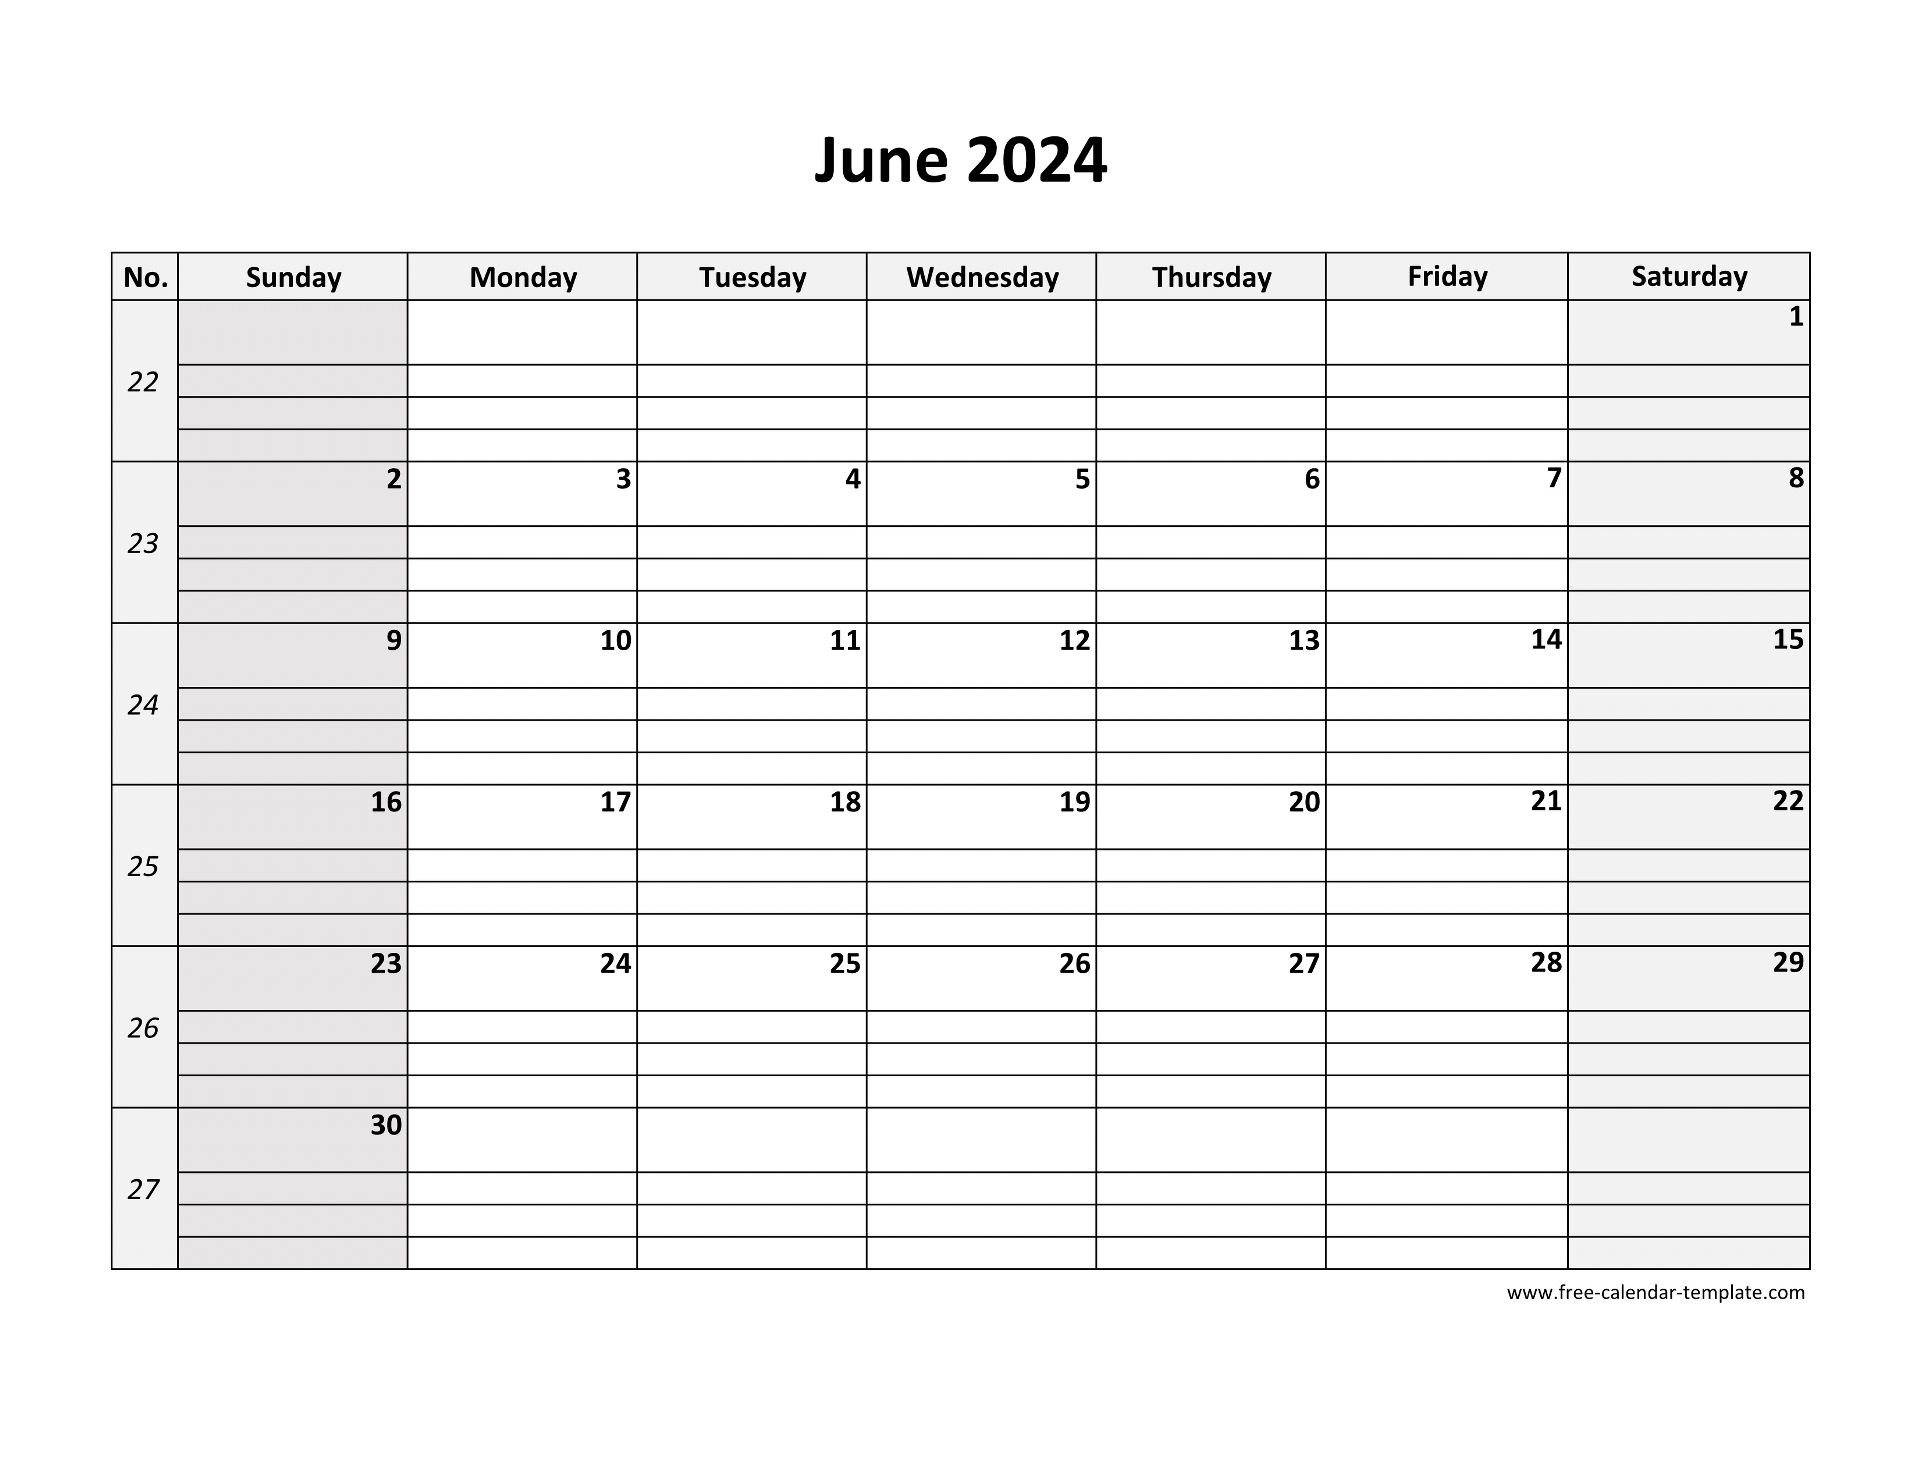 June 2024 Calendar Free Printable With Grid Lines Designed for June 2024 Printable Calendar With Lines